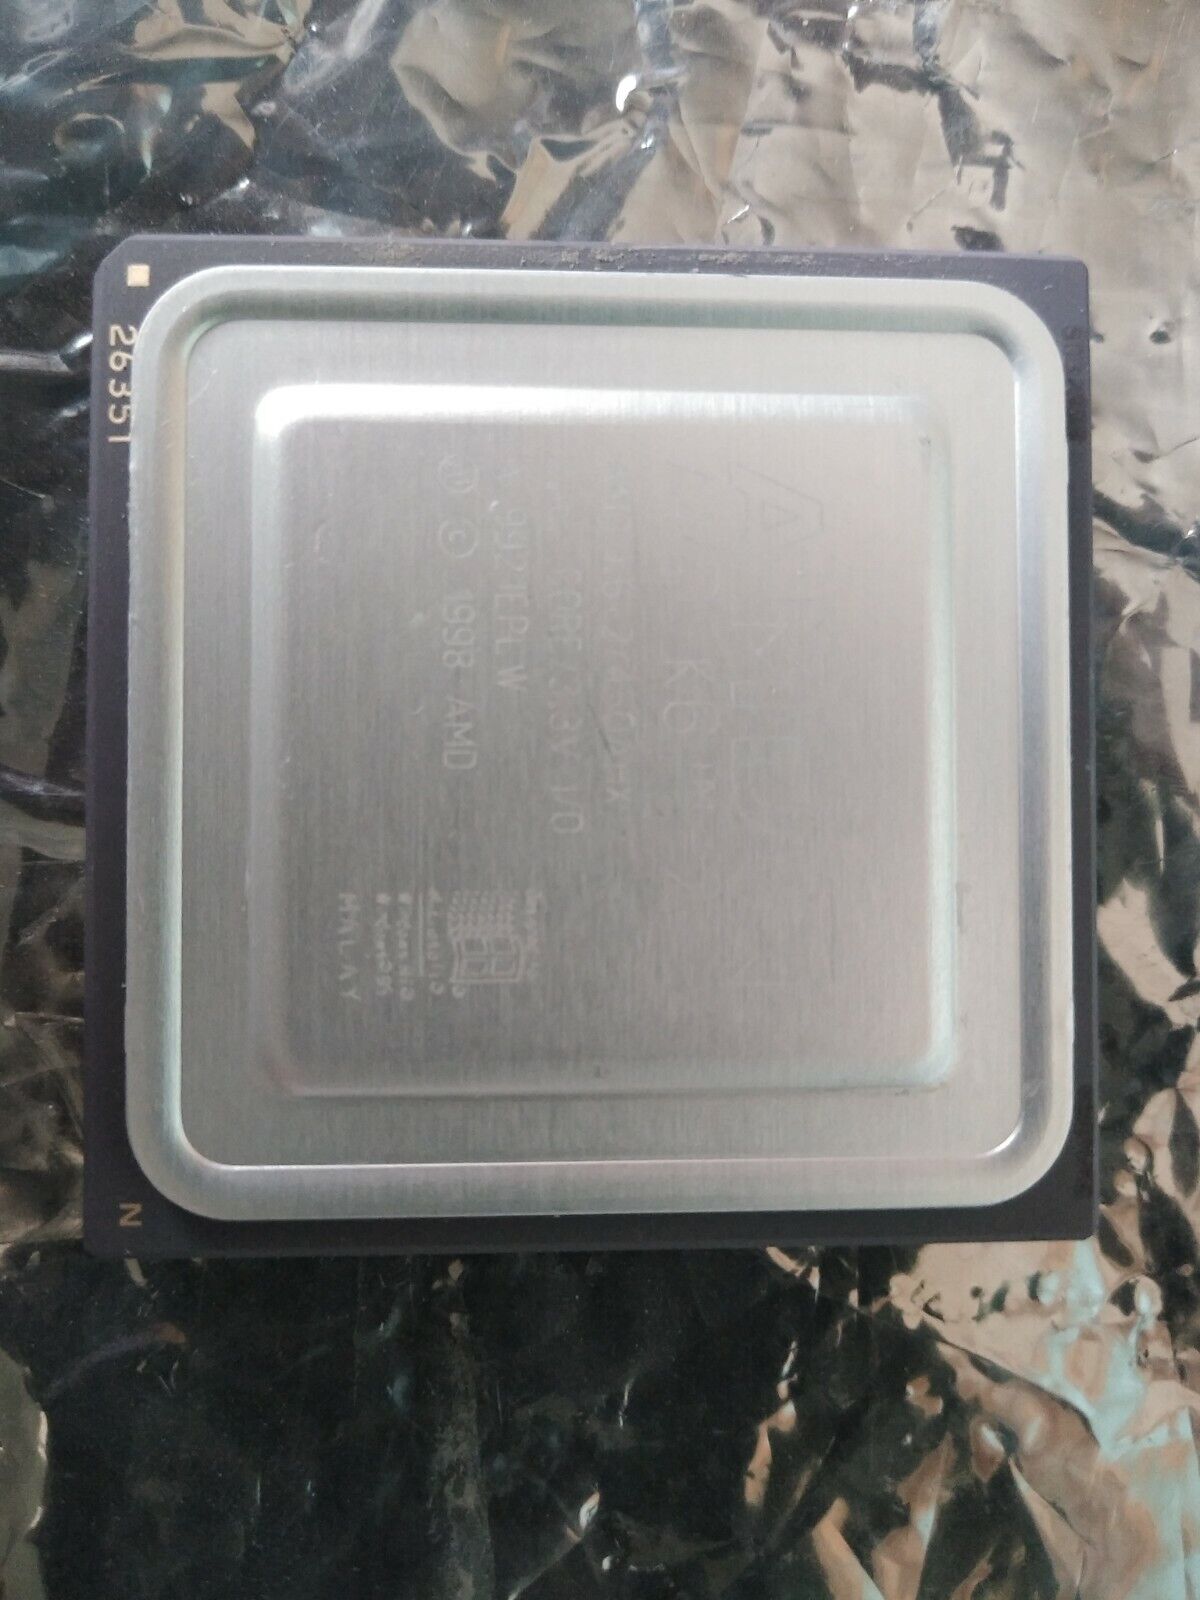 AMD CPU Processor AMD-K6-2/450AHX